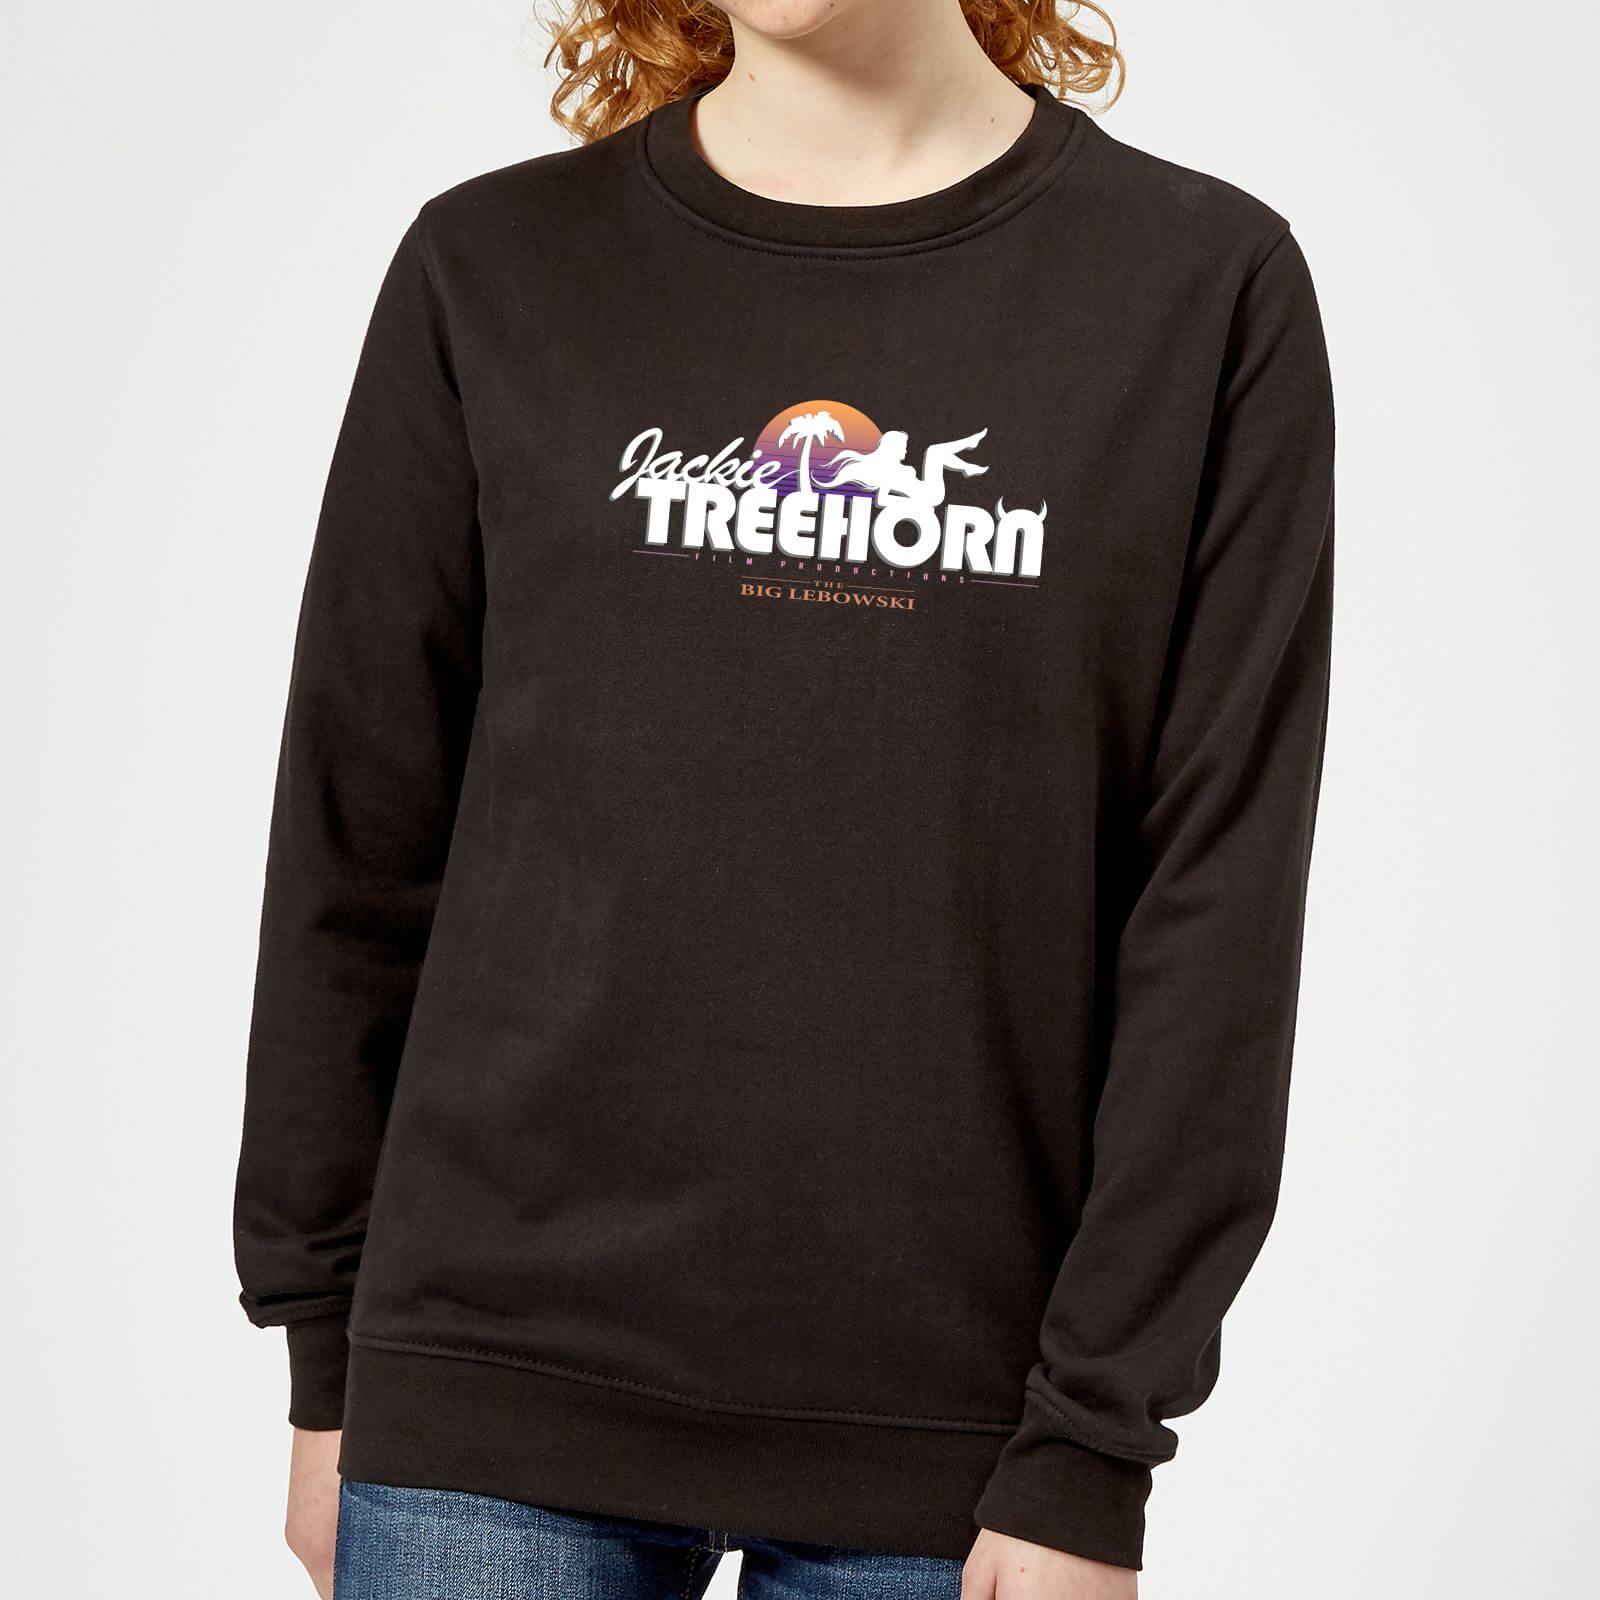 The Big Lebowski Treehorn Logo Women's Sweatshirt - Black - XS - Black